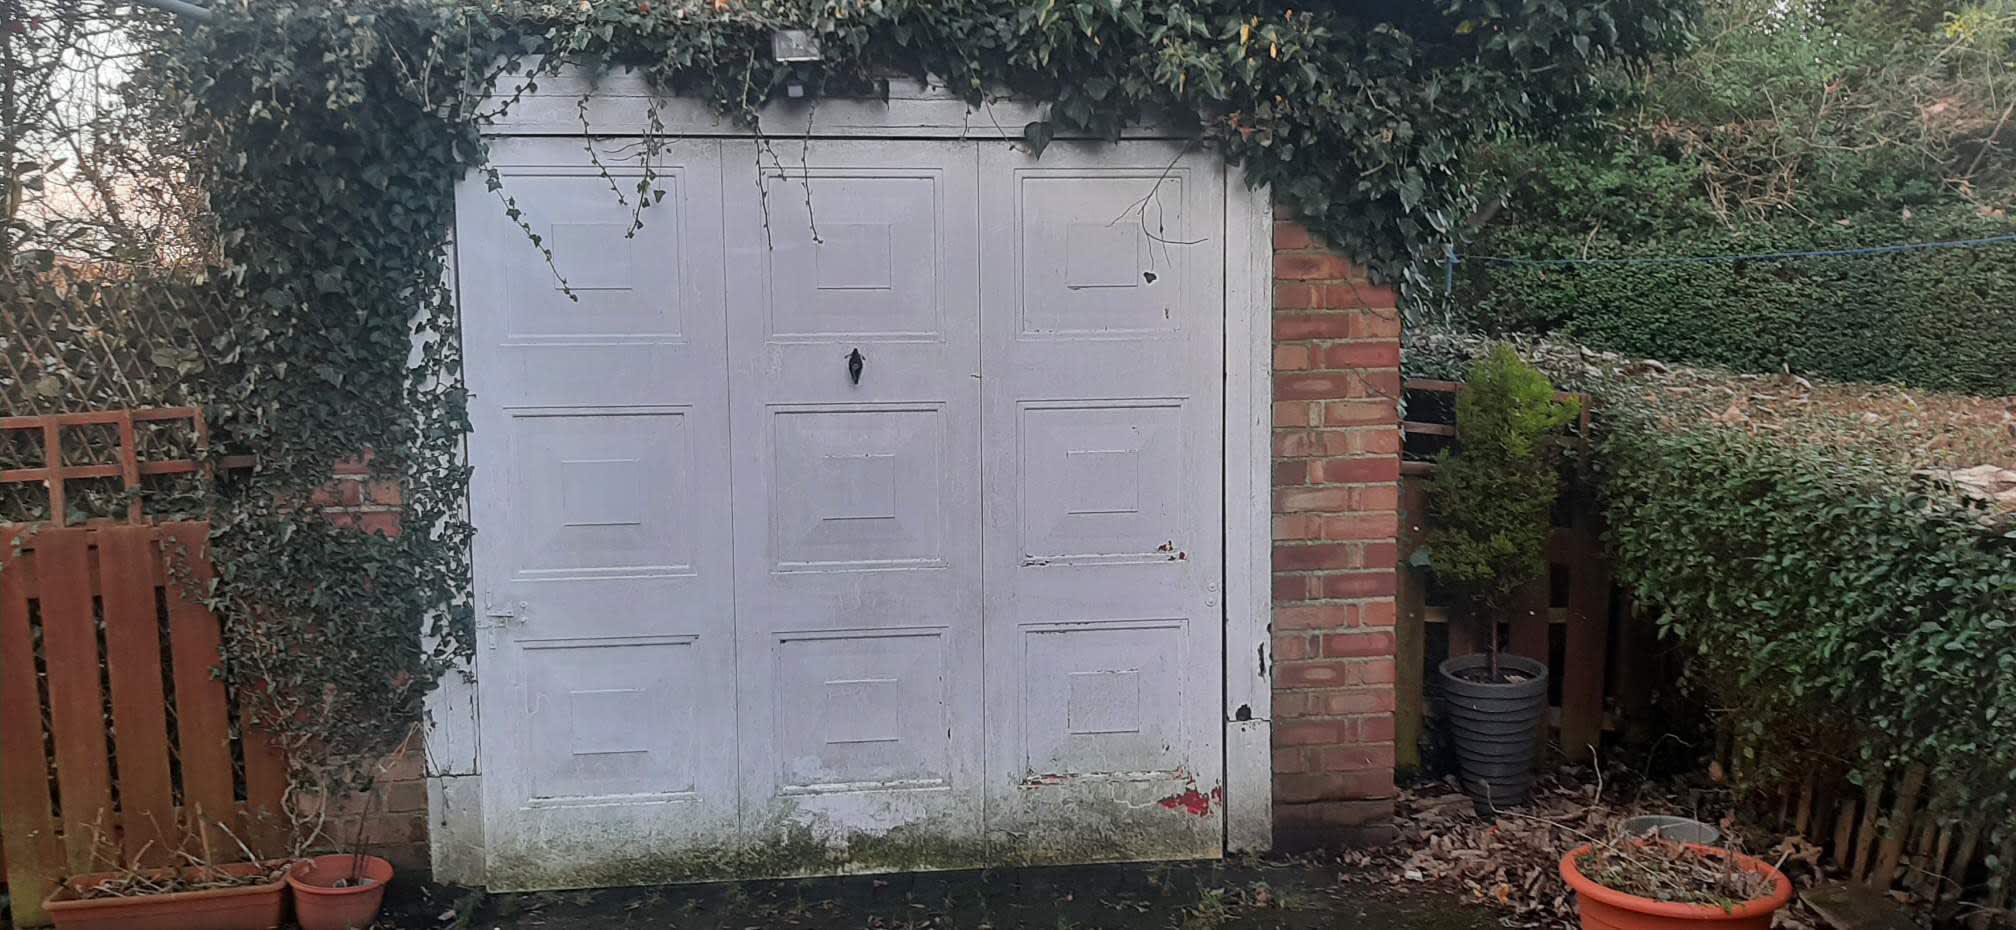 Images Tyne and Wear Garage Doors